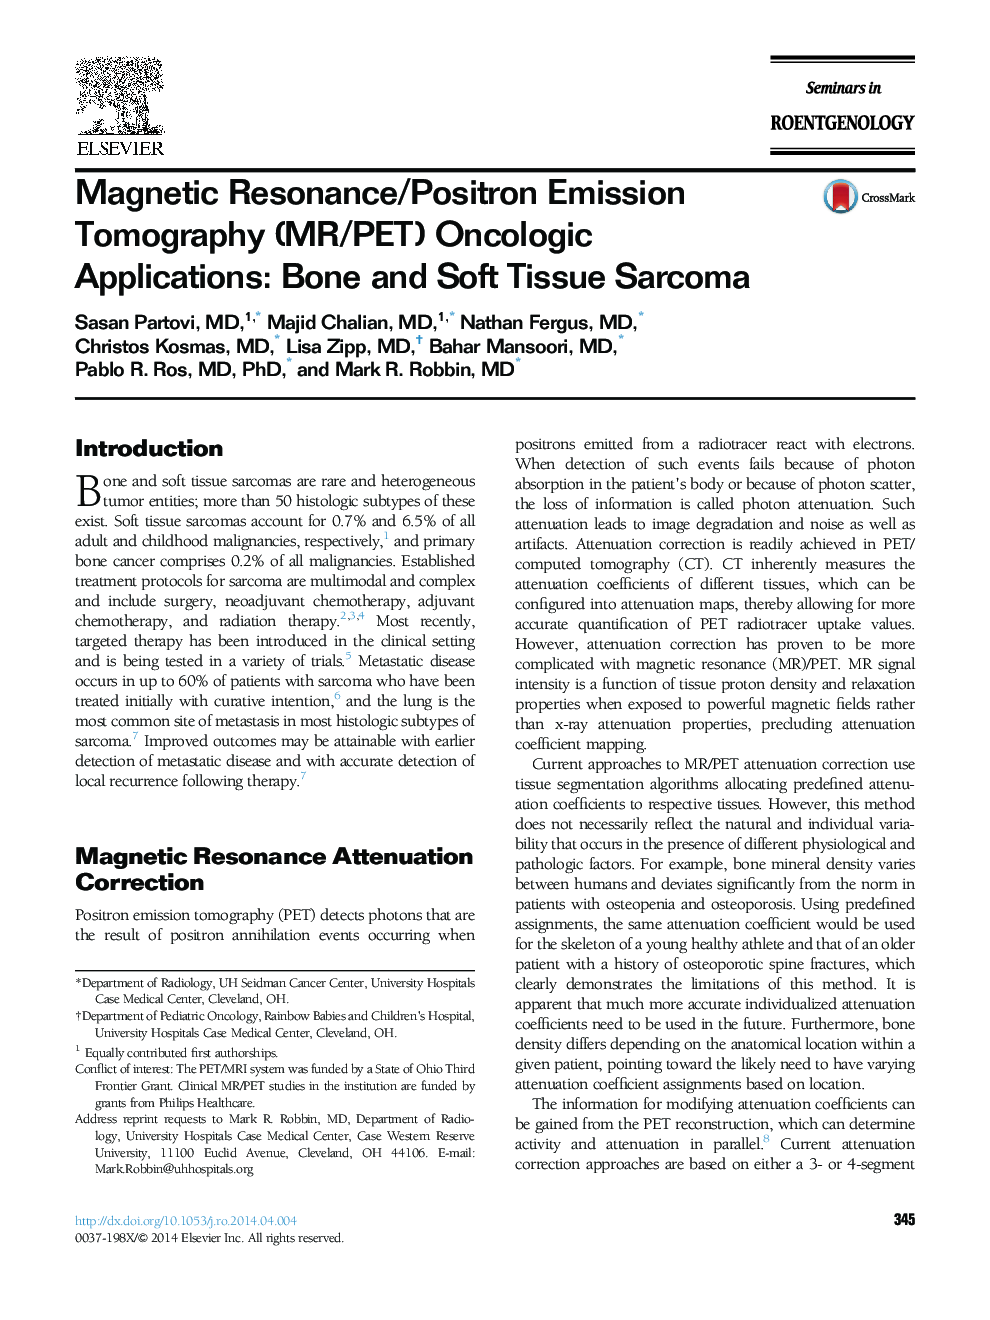 Magnetic Resonance/Positron Emission Tomography (MR/PET) Oncologic Applications: Bone and Soft Tissue Sarcoma